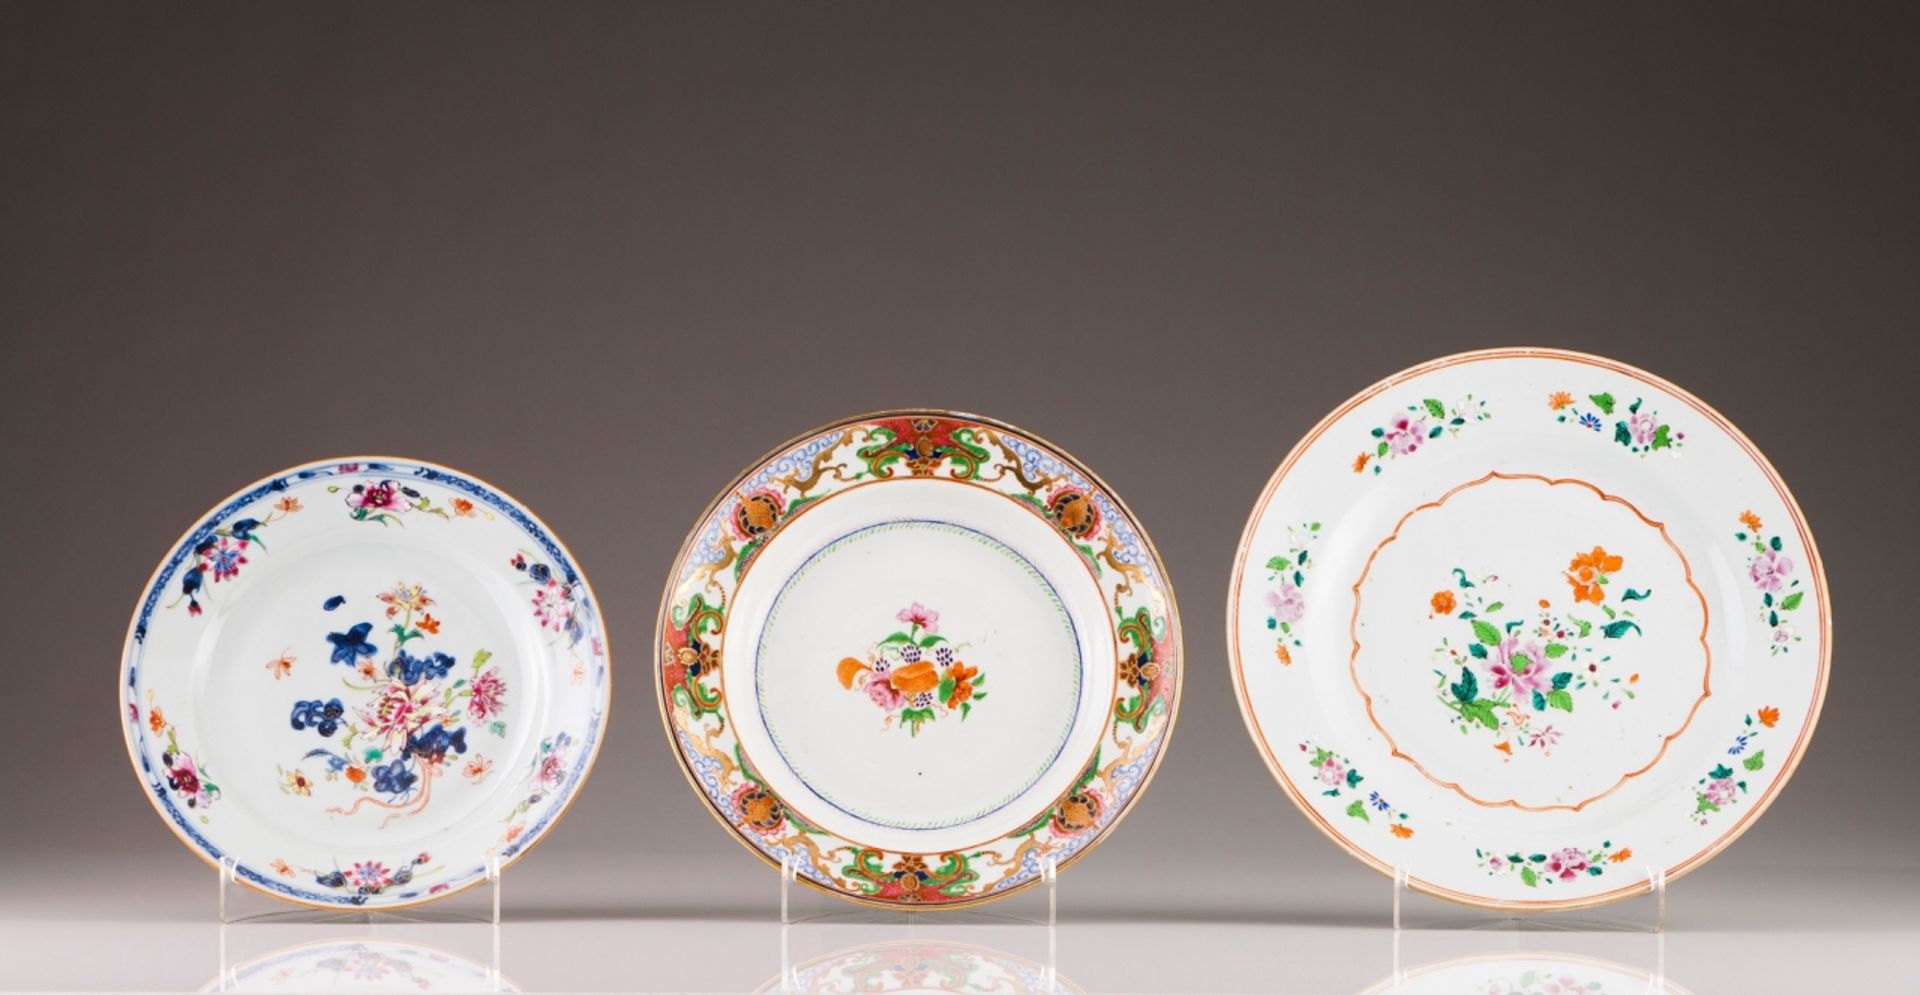 A Qianlong plate
Chinese export porcelain
Polychrome decoration depicting flowers
Qianlong Period (